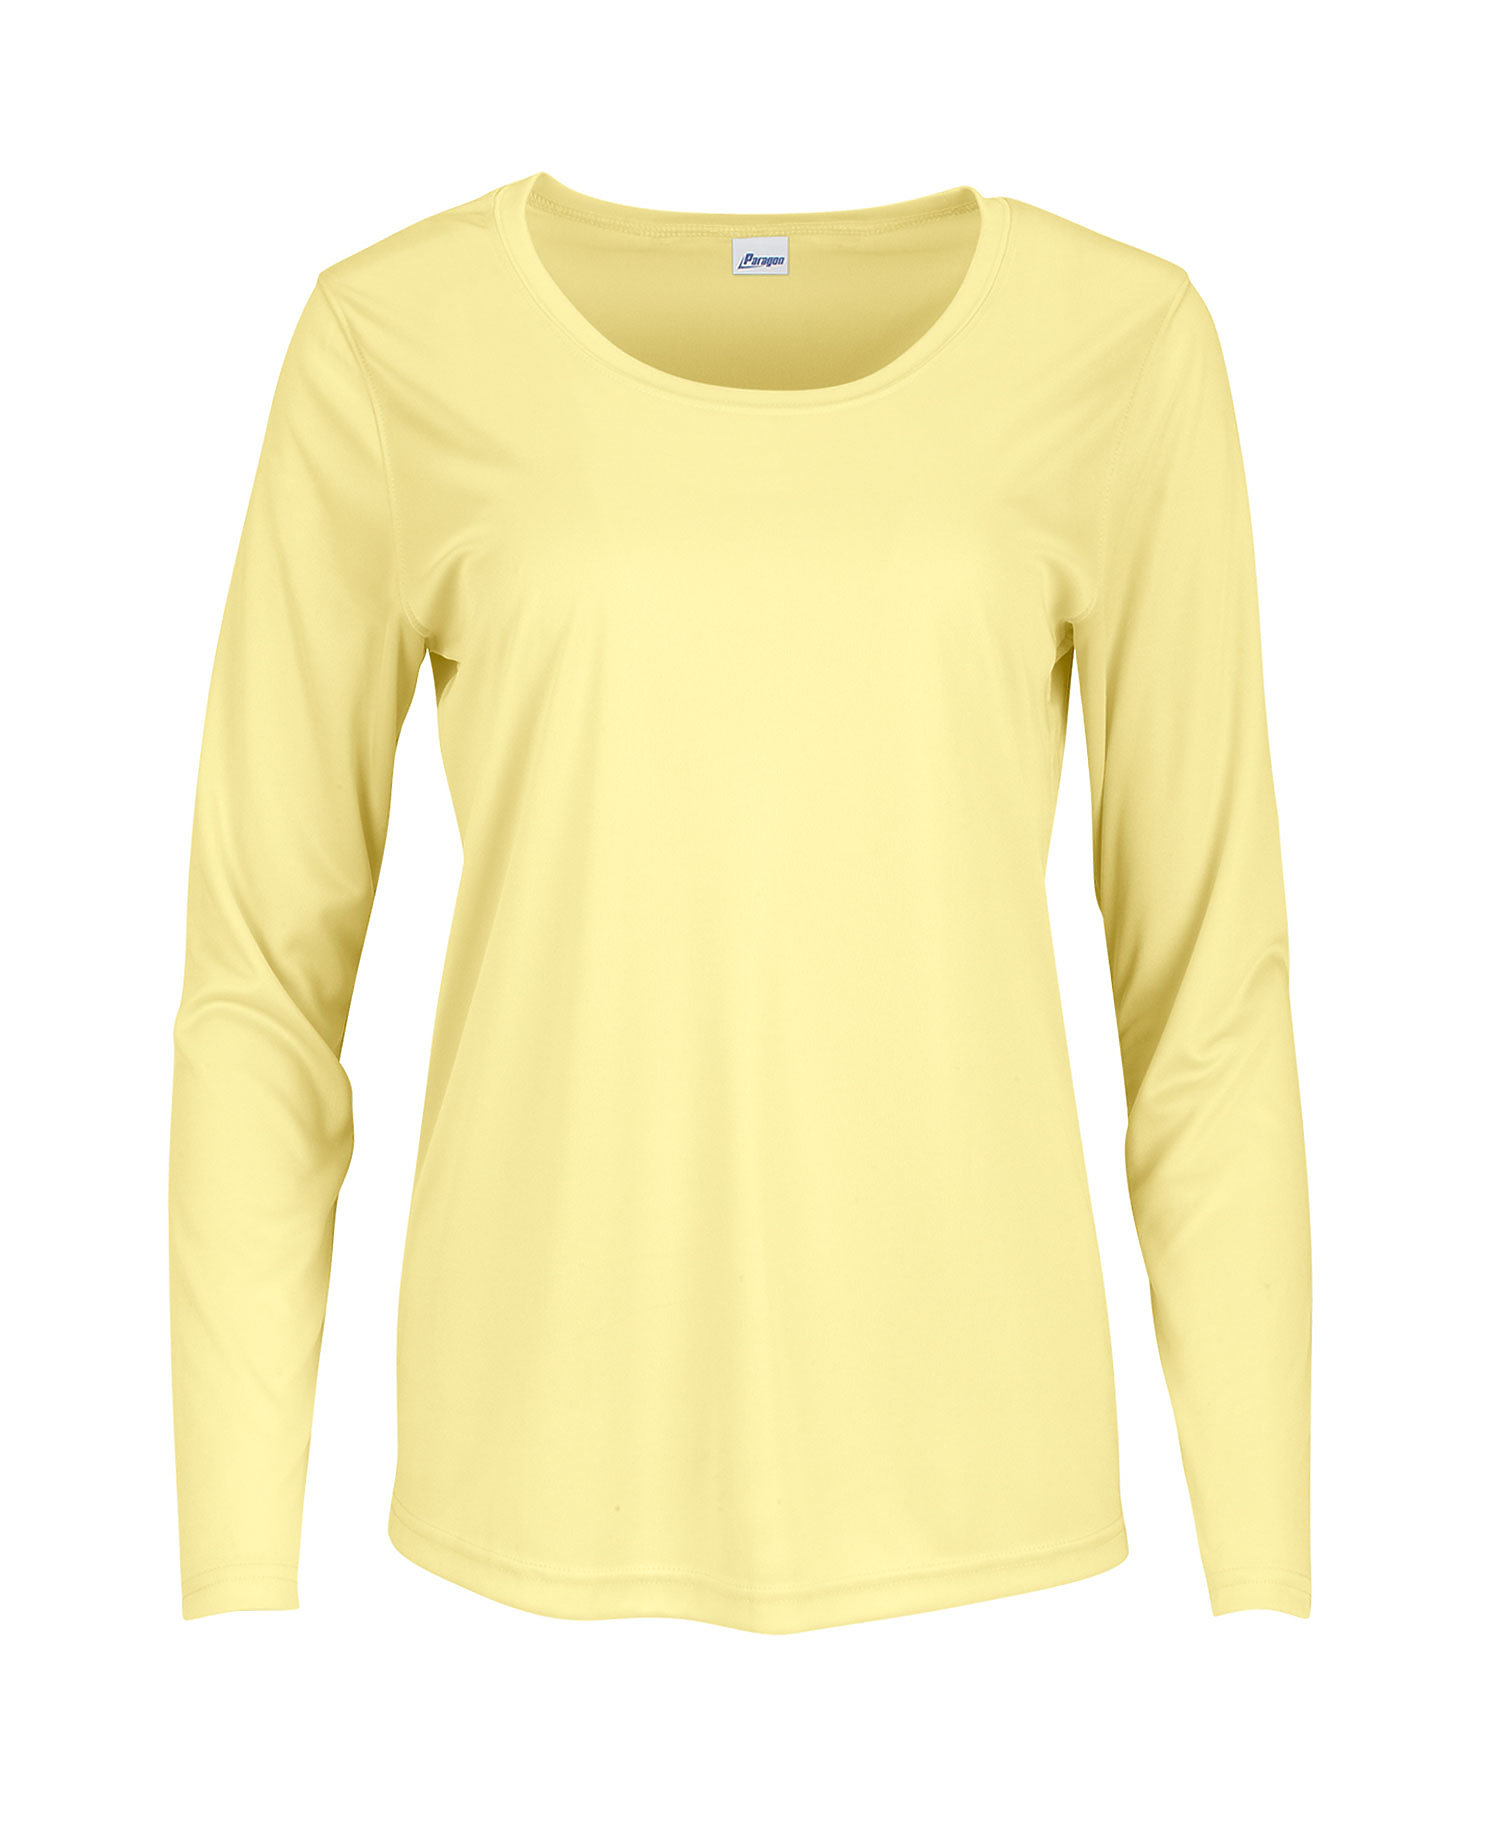 bright yellow long sleeve shirt